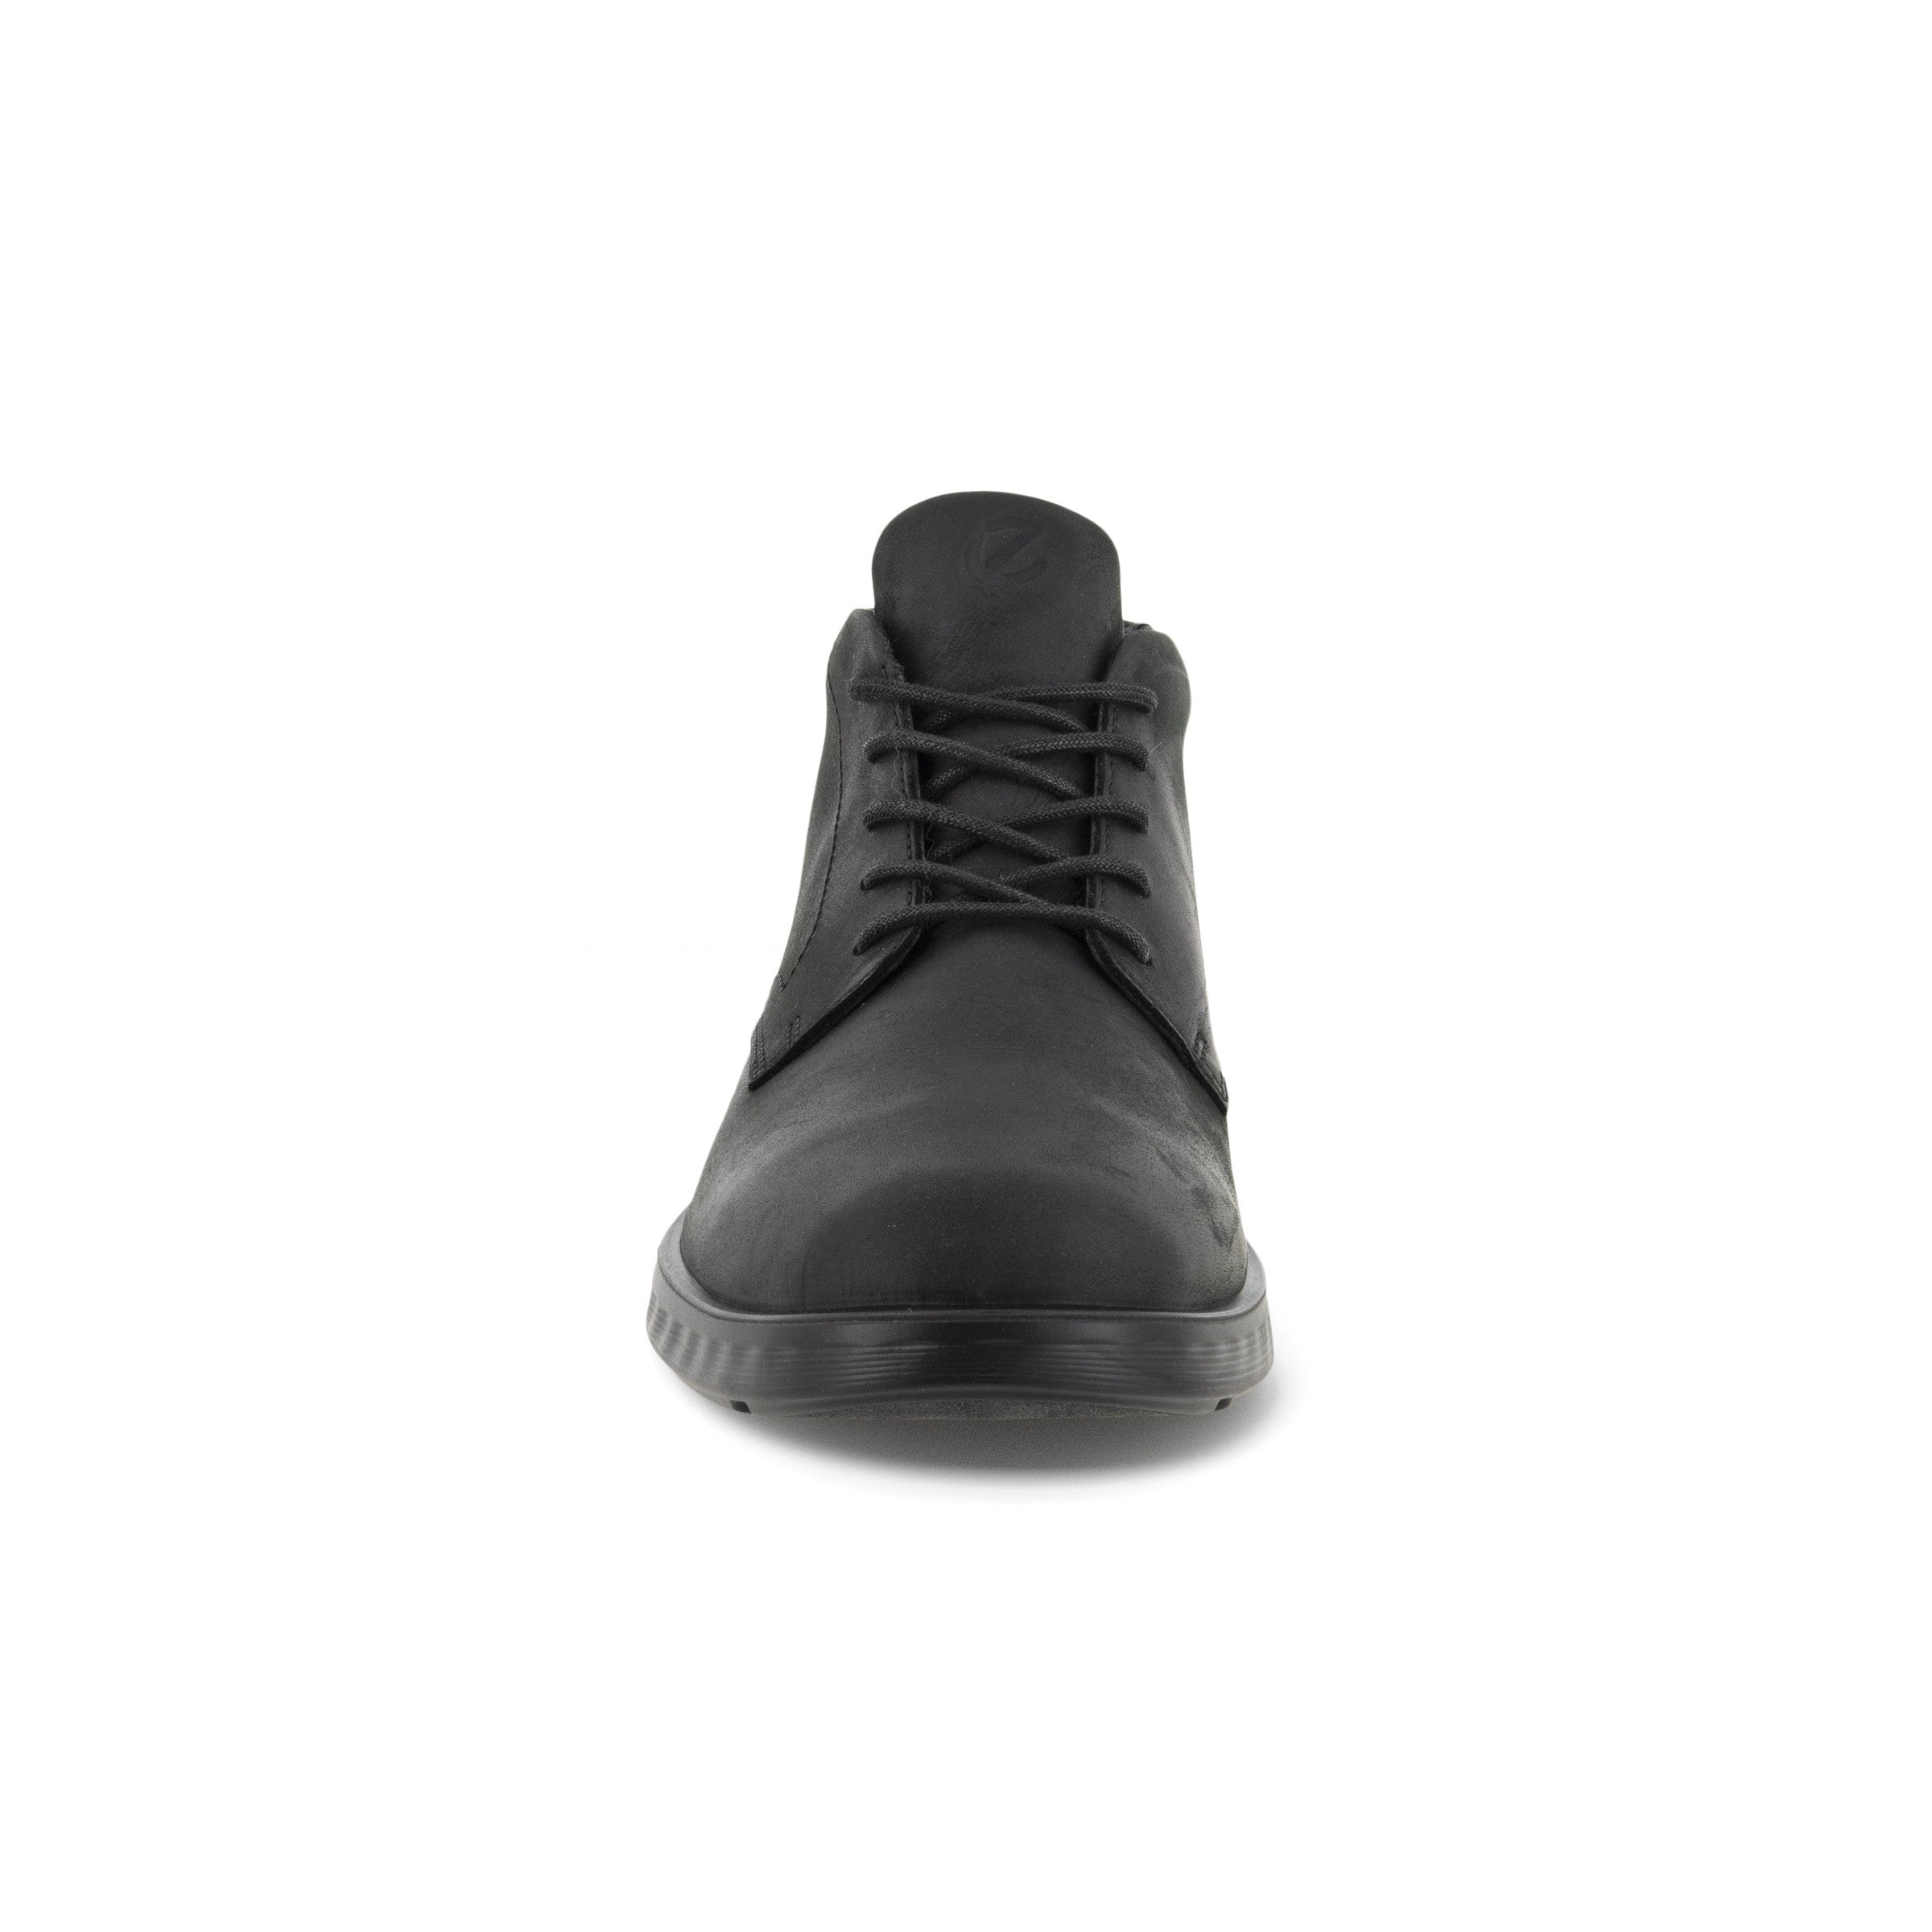 S Lite Hybrid Boot 520334 M - shoe&amp;me - Ecco - Boot - Boots, Mens, Winter